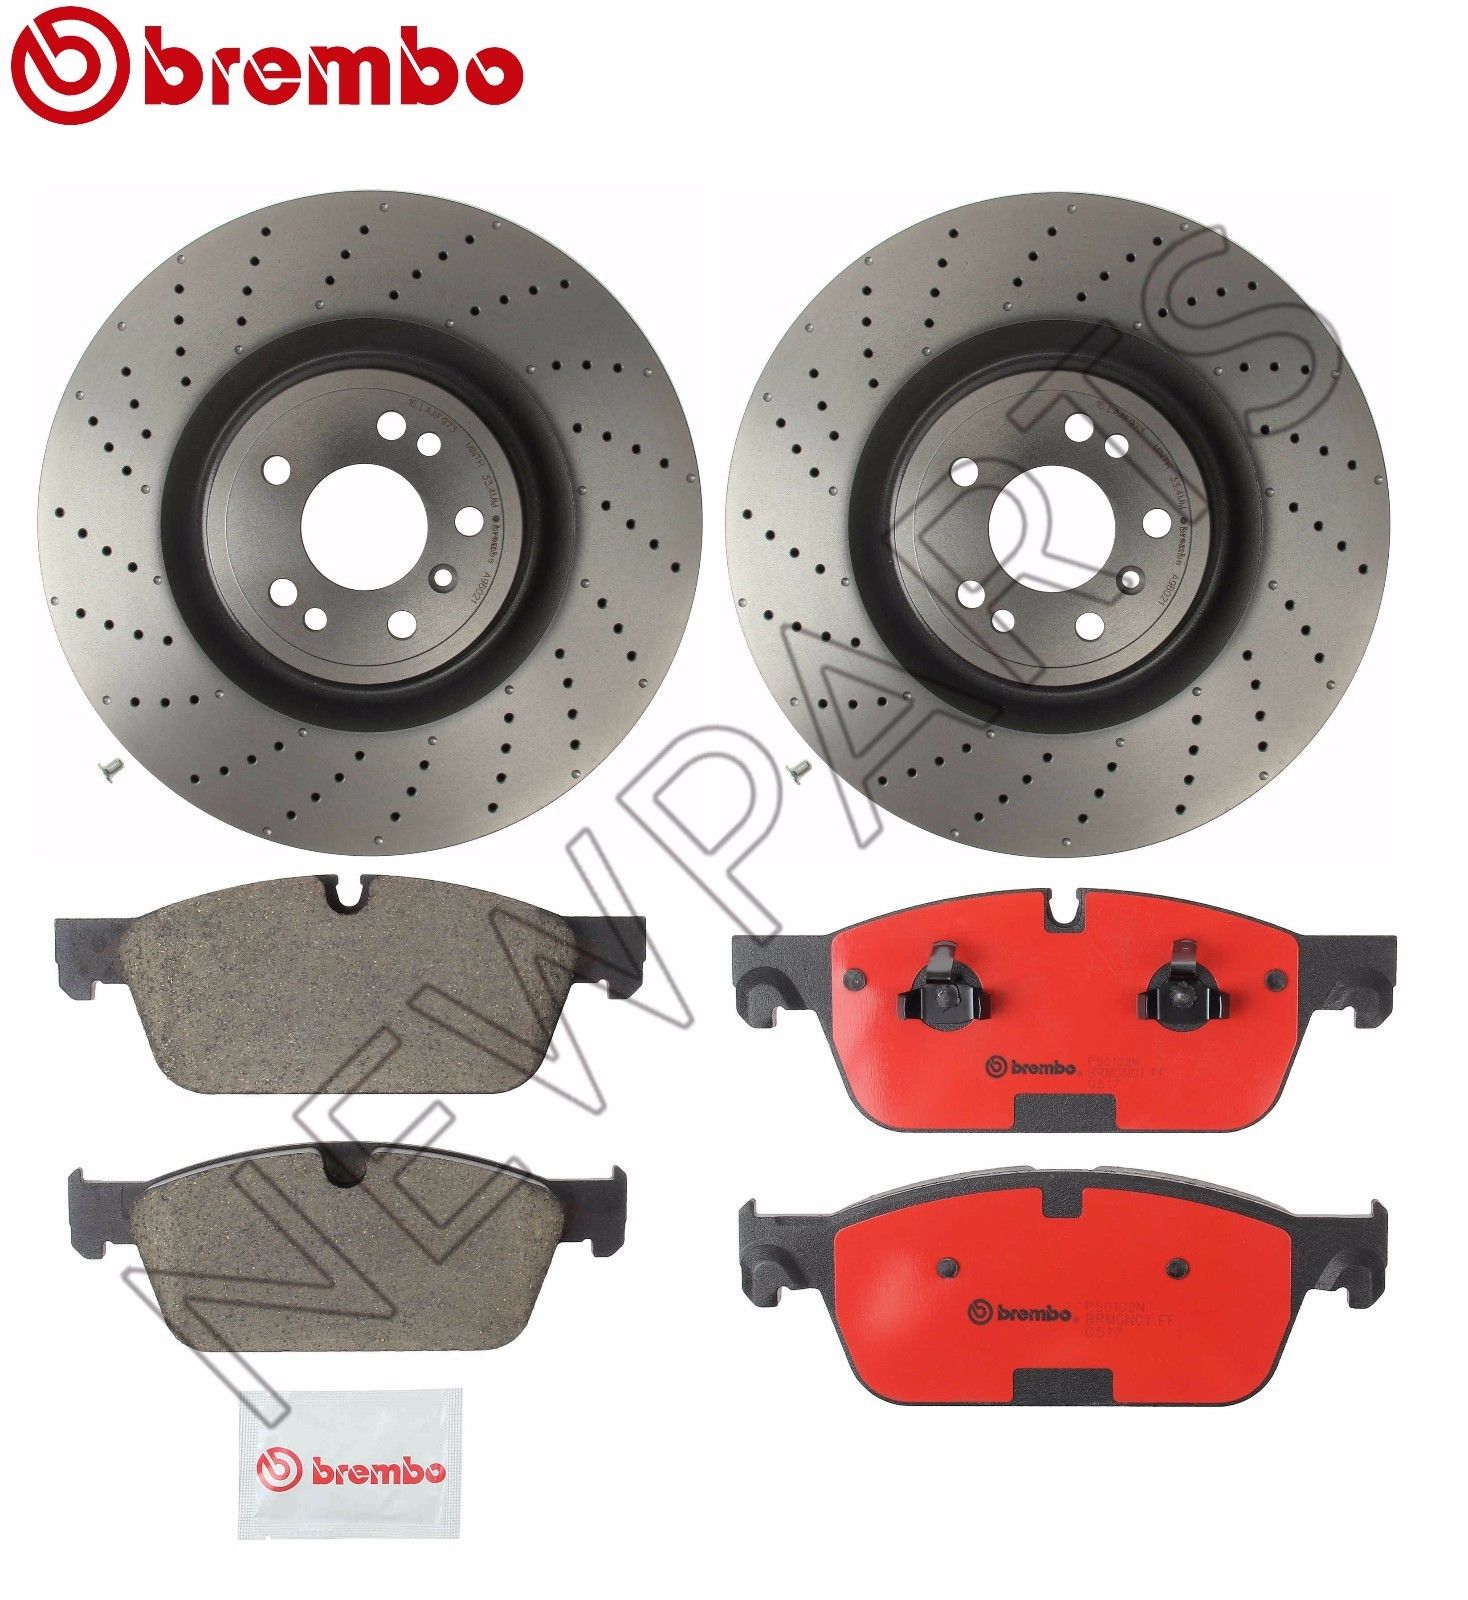 For MB GL350 450 GLE450 AMG Front Disc Brake Rotors and Ceramic Pads Kit Brembo 